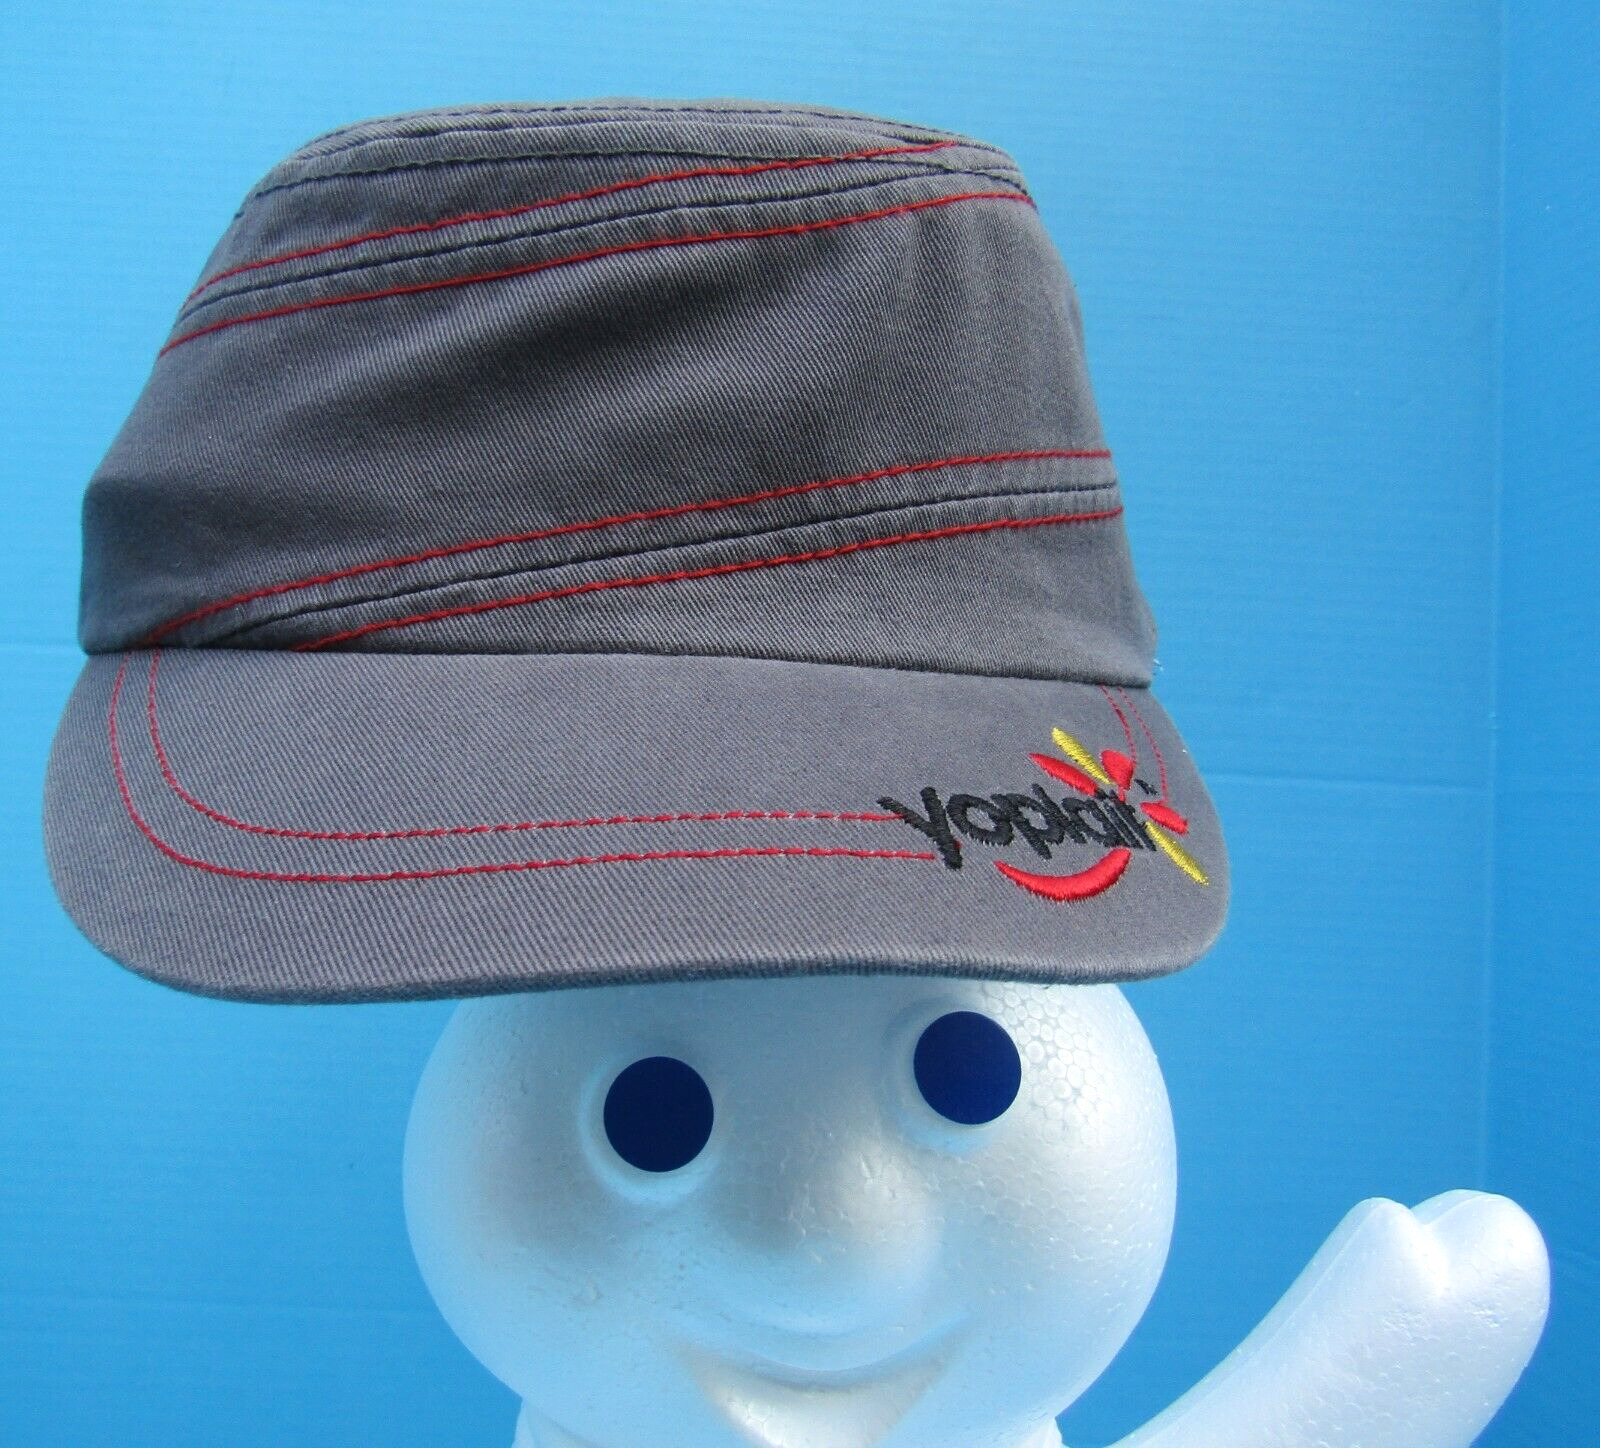 FS NEW YOPLAIT GRAY DENIM CAP / HAT by General Mills - 2012 - One Size Fits All